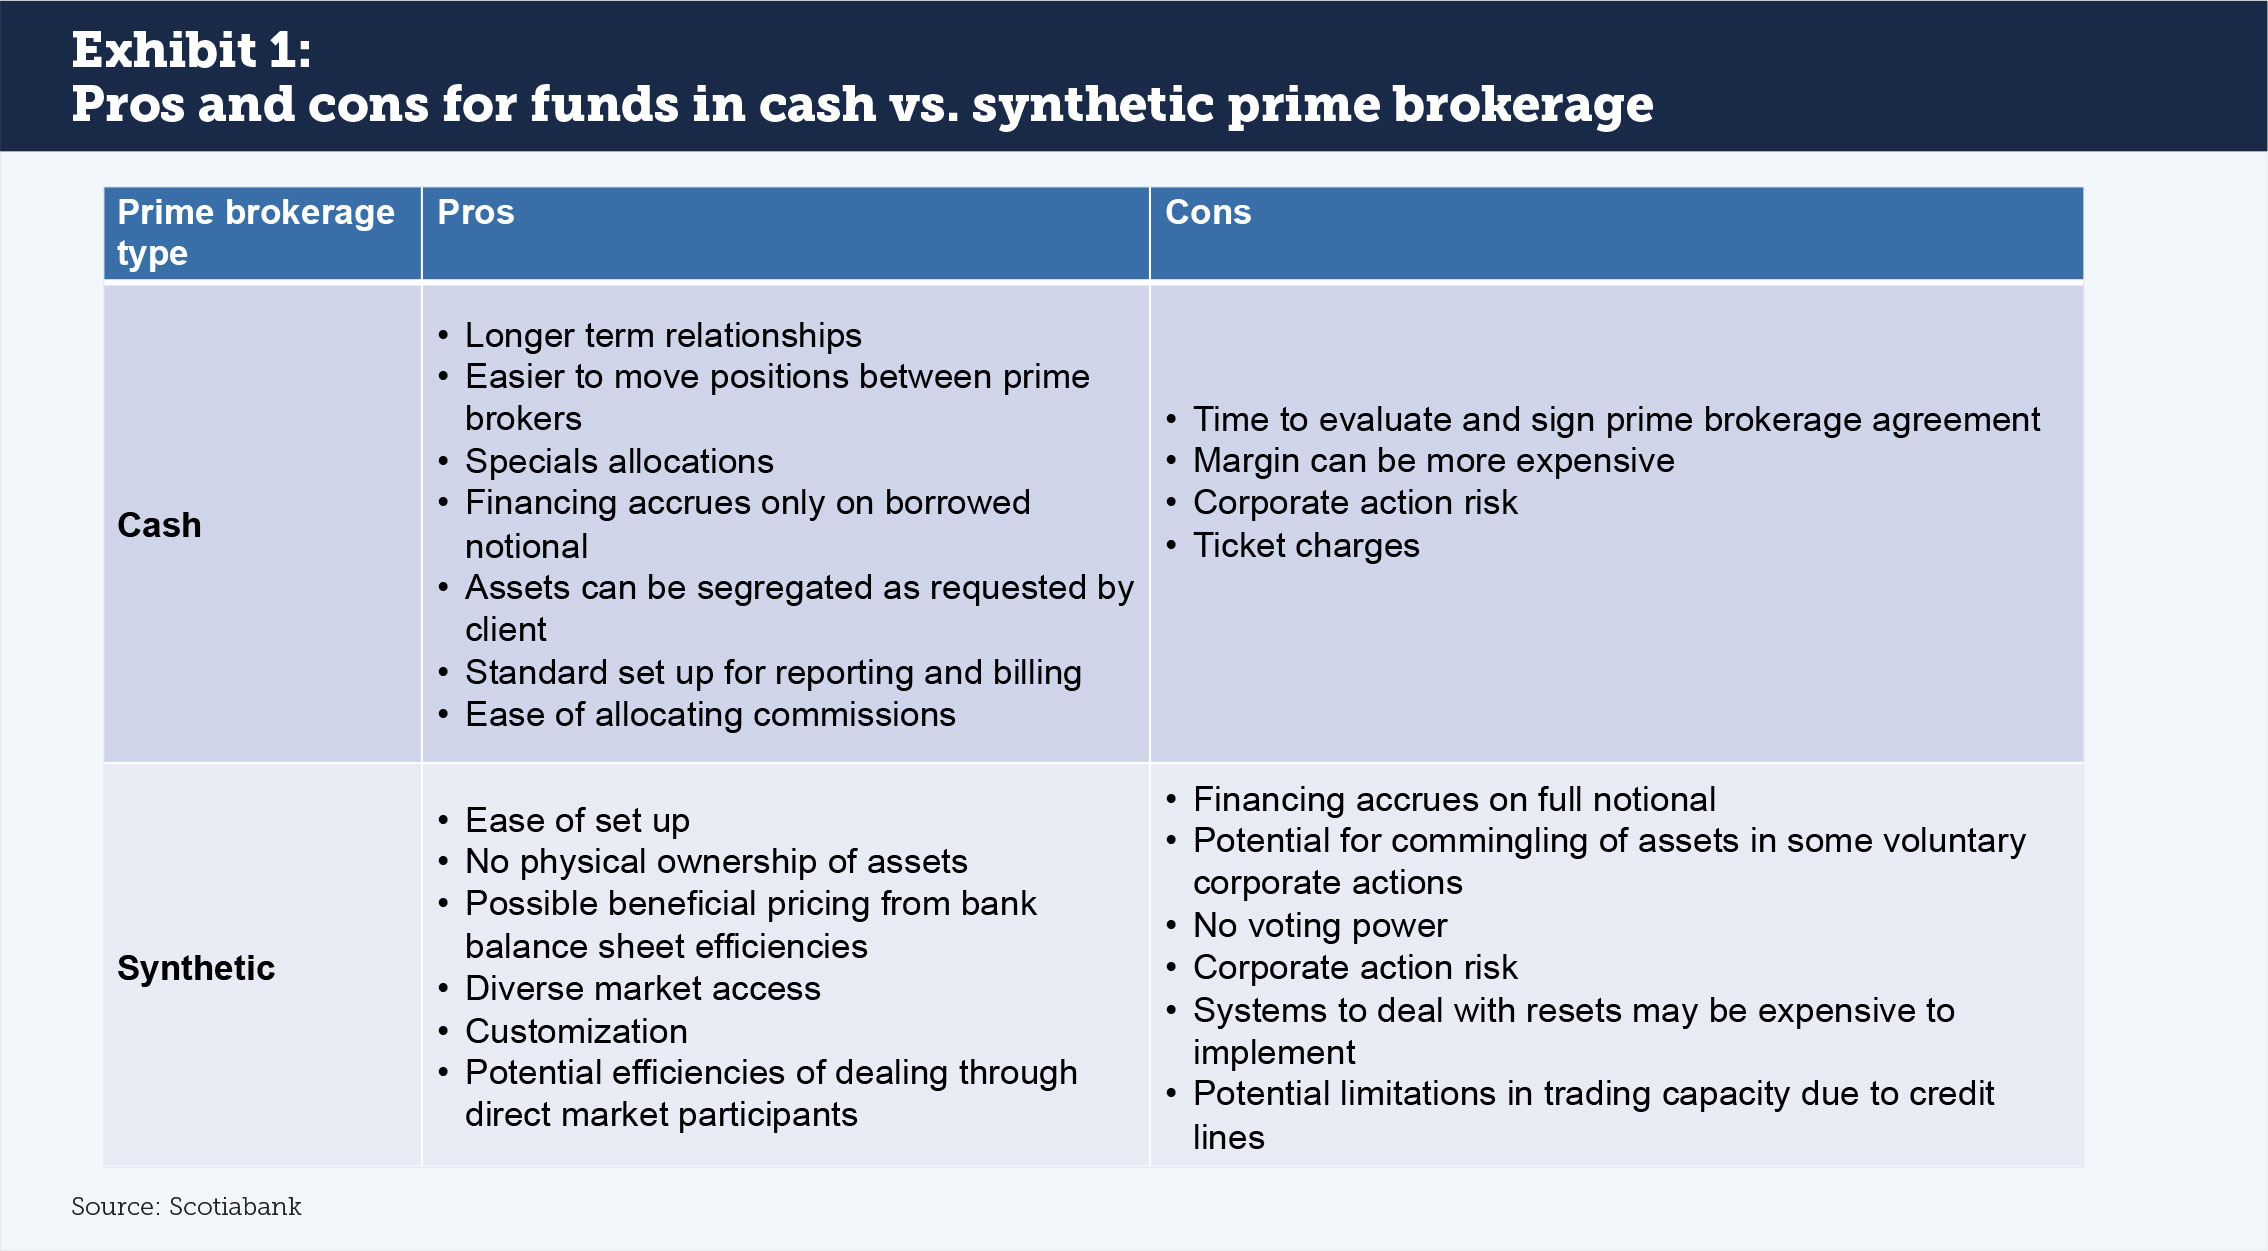 Prime Brokerage: Culture of Partnership